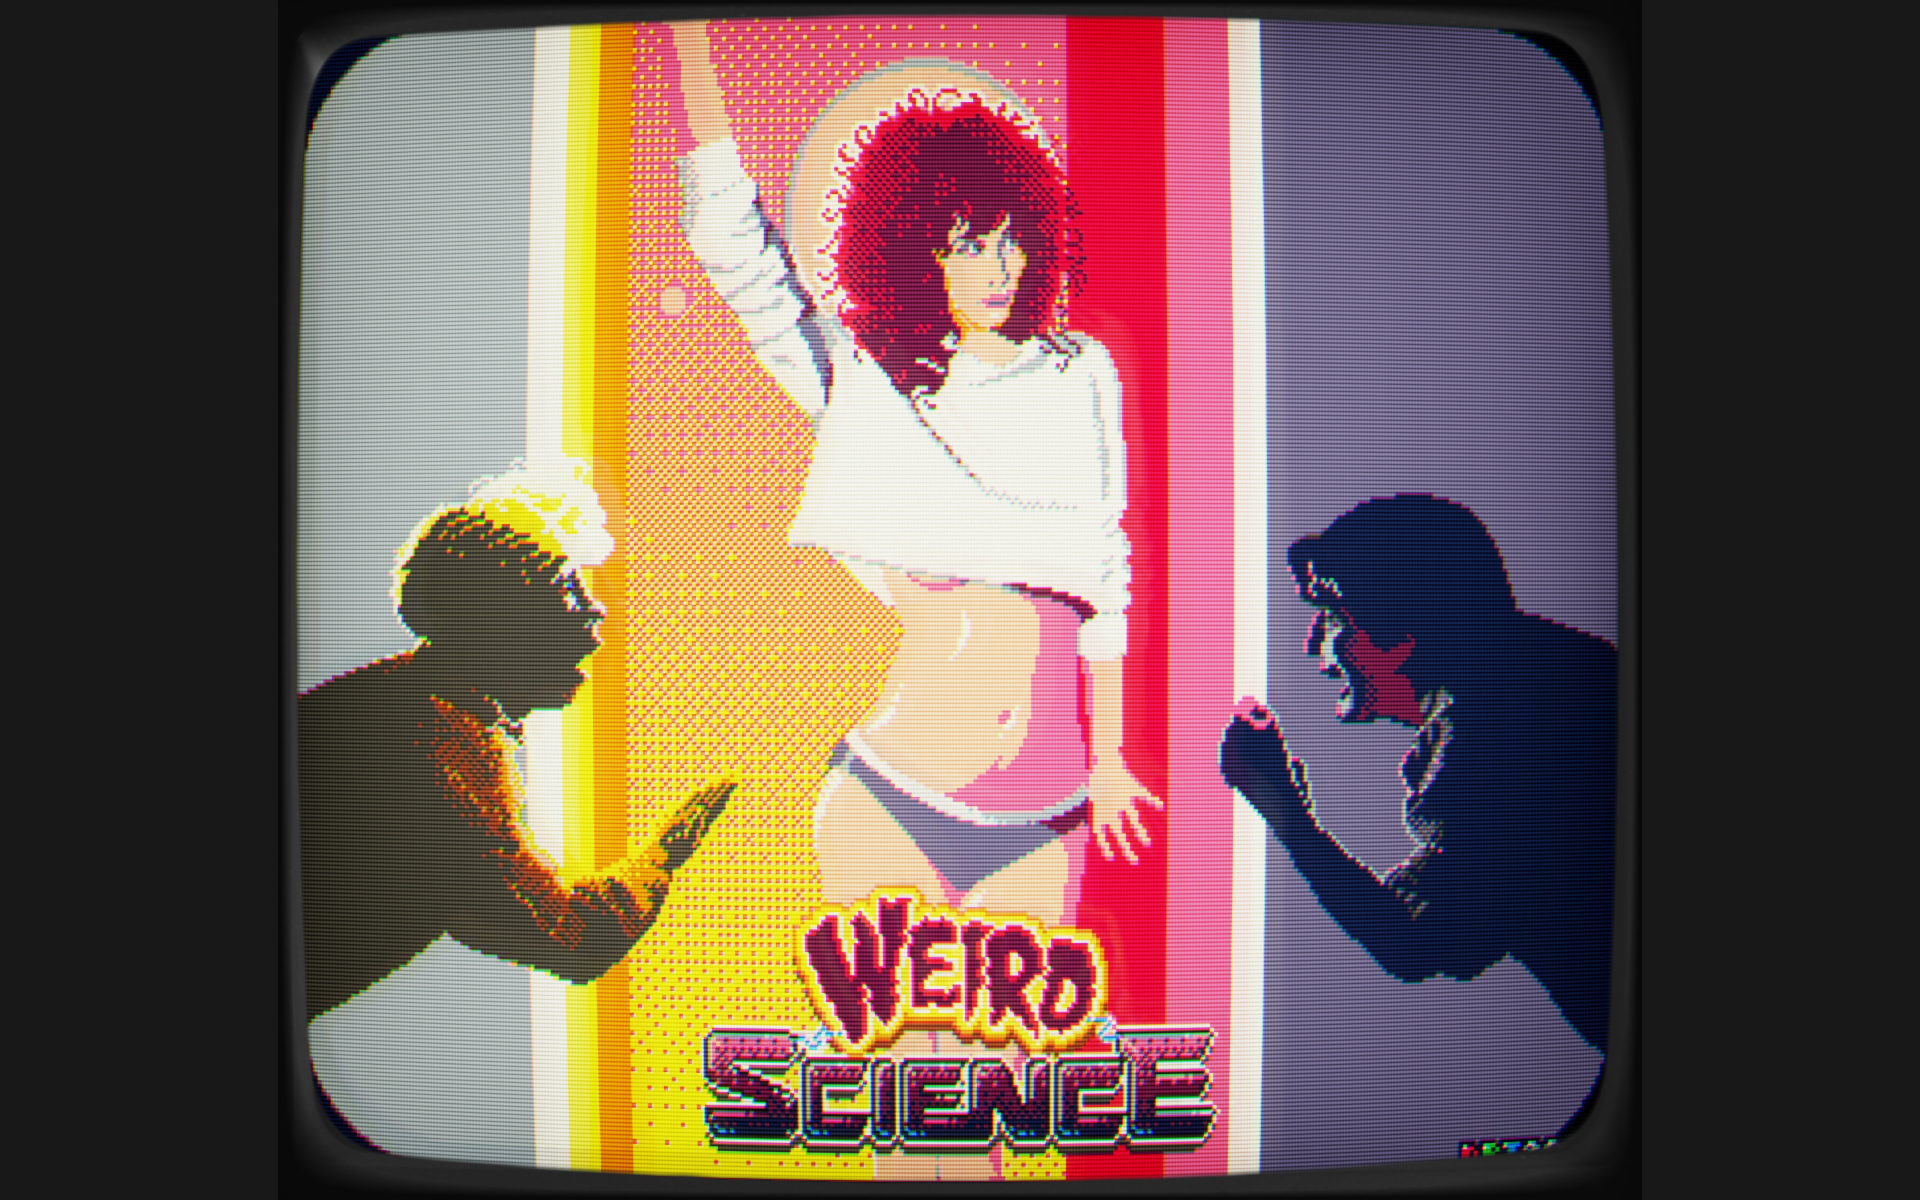 Weird Science, CRT style